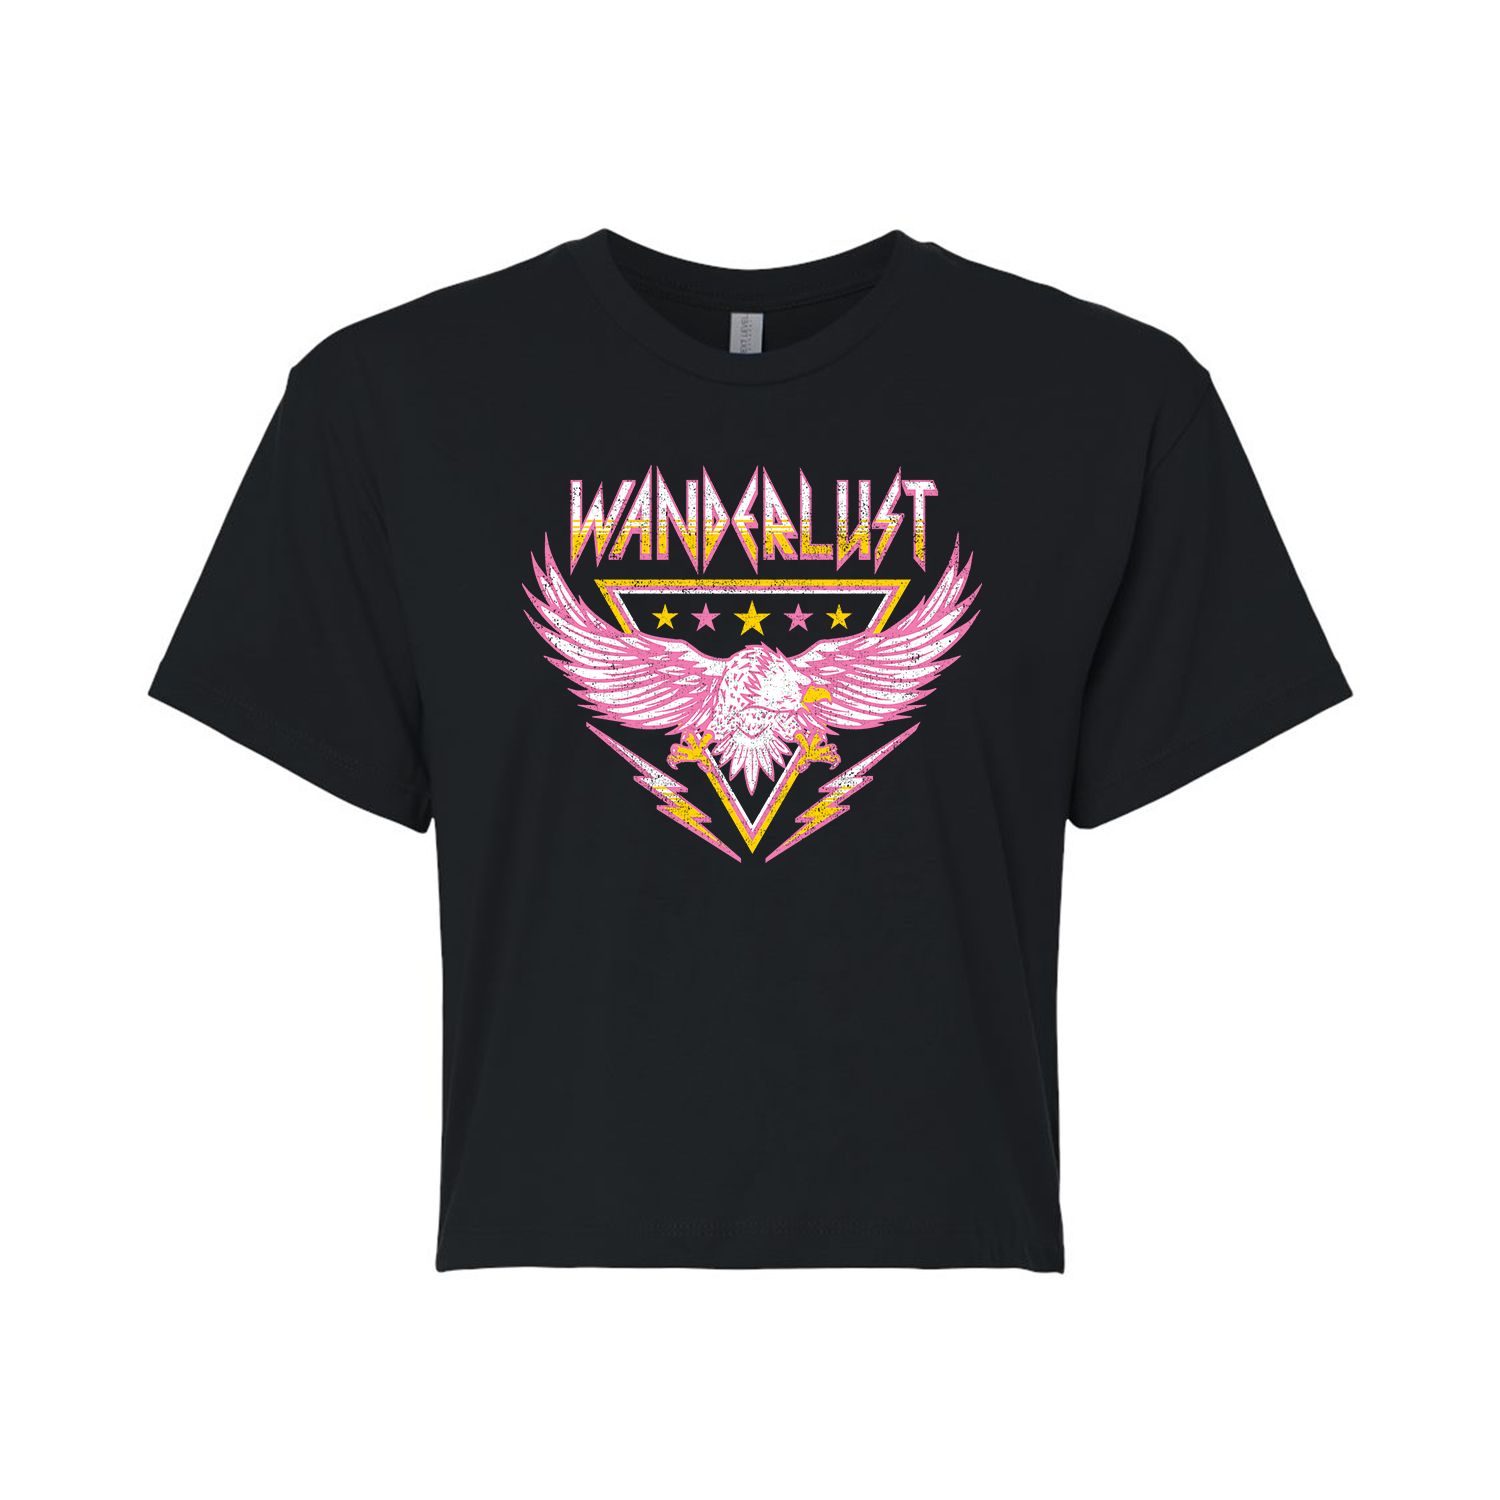 Укороченная футболка для юниоров Rock Eagle Wanderlust Licensed Character